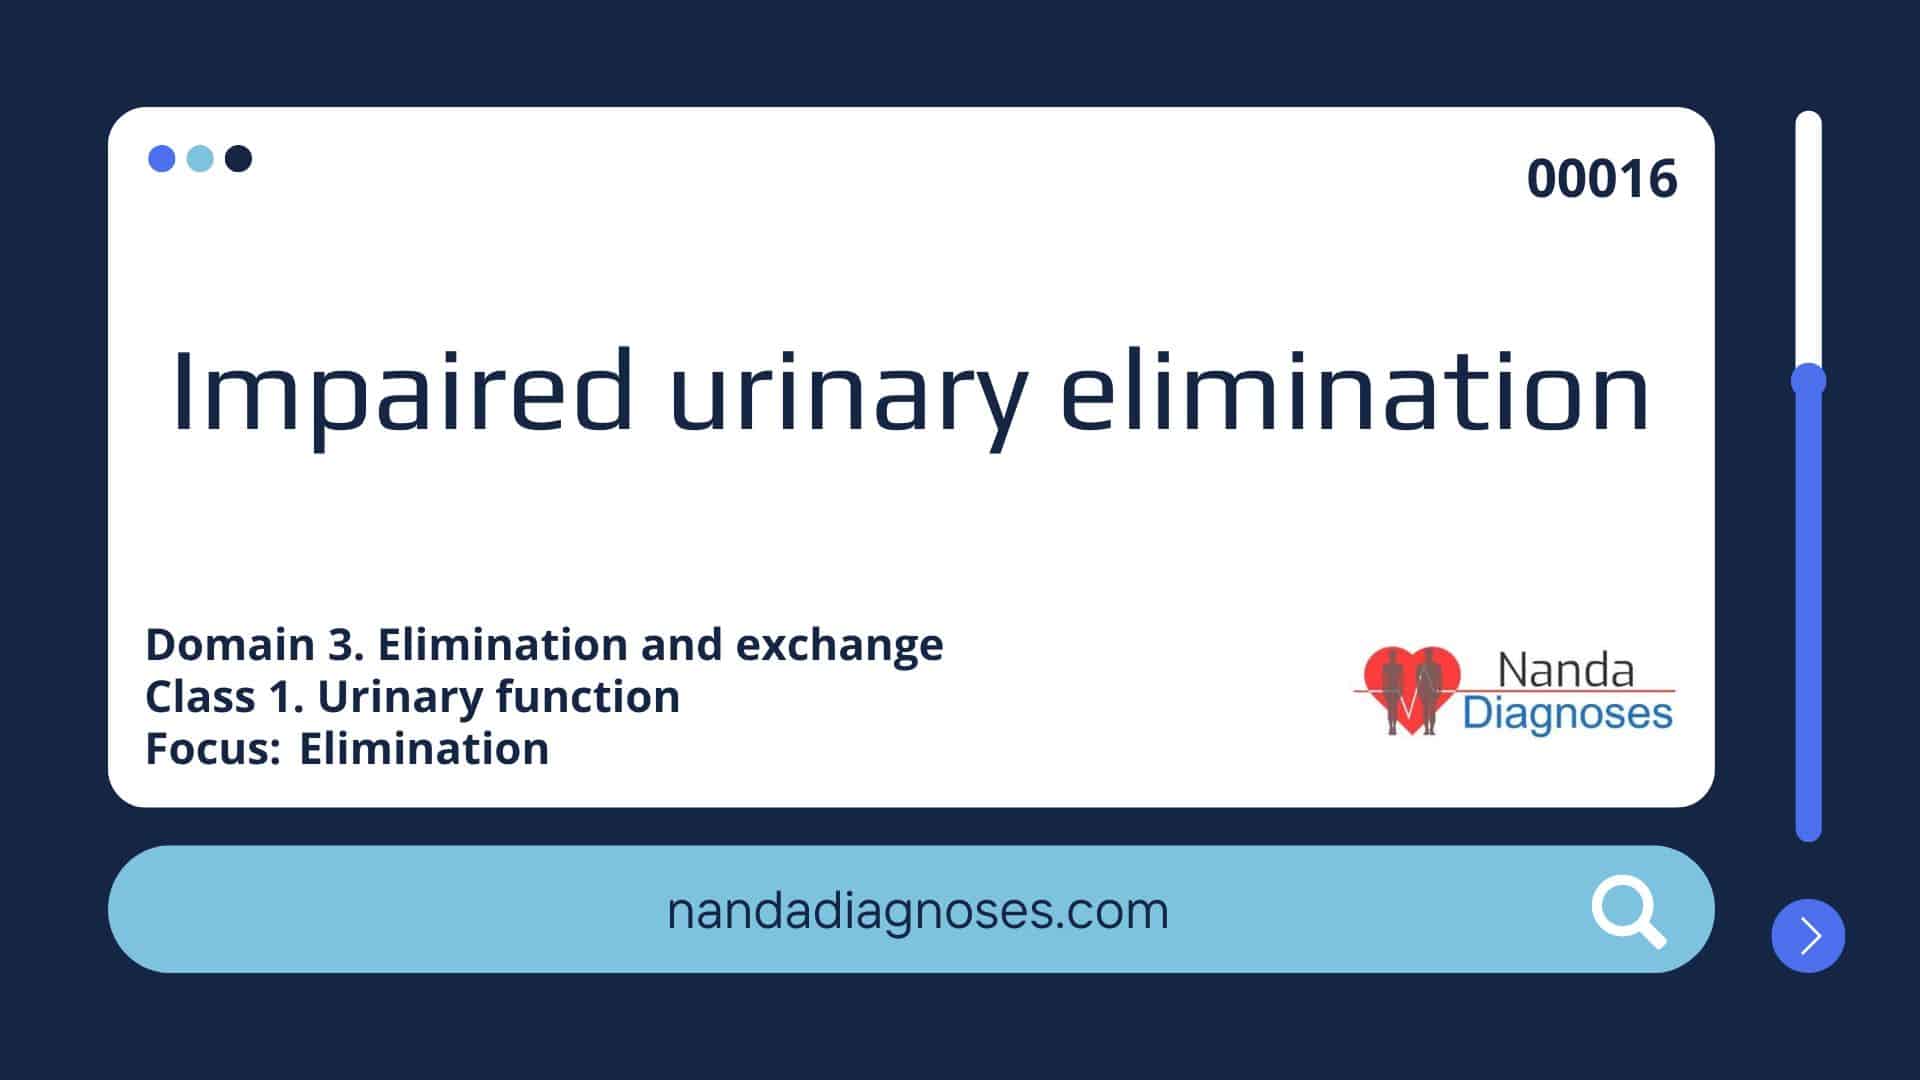 Impaired urinary elimination